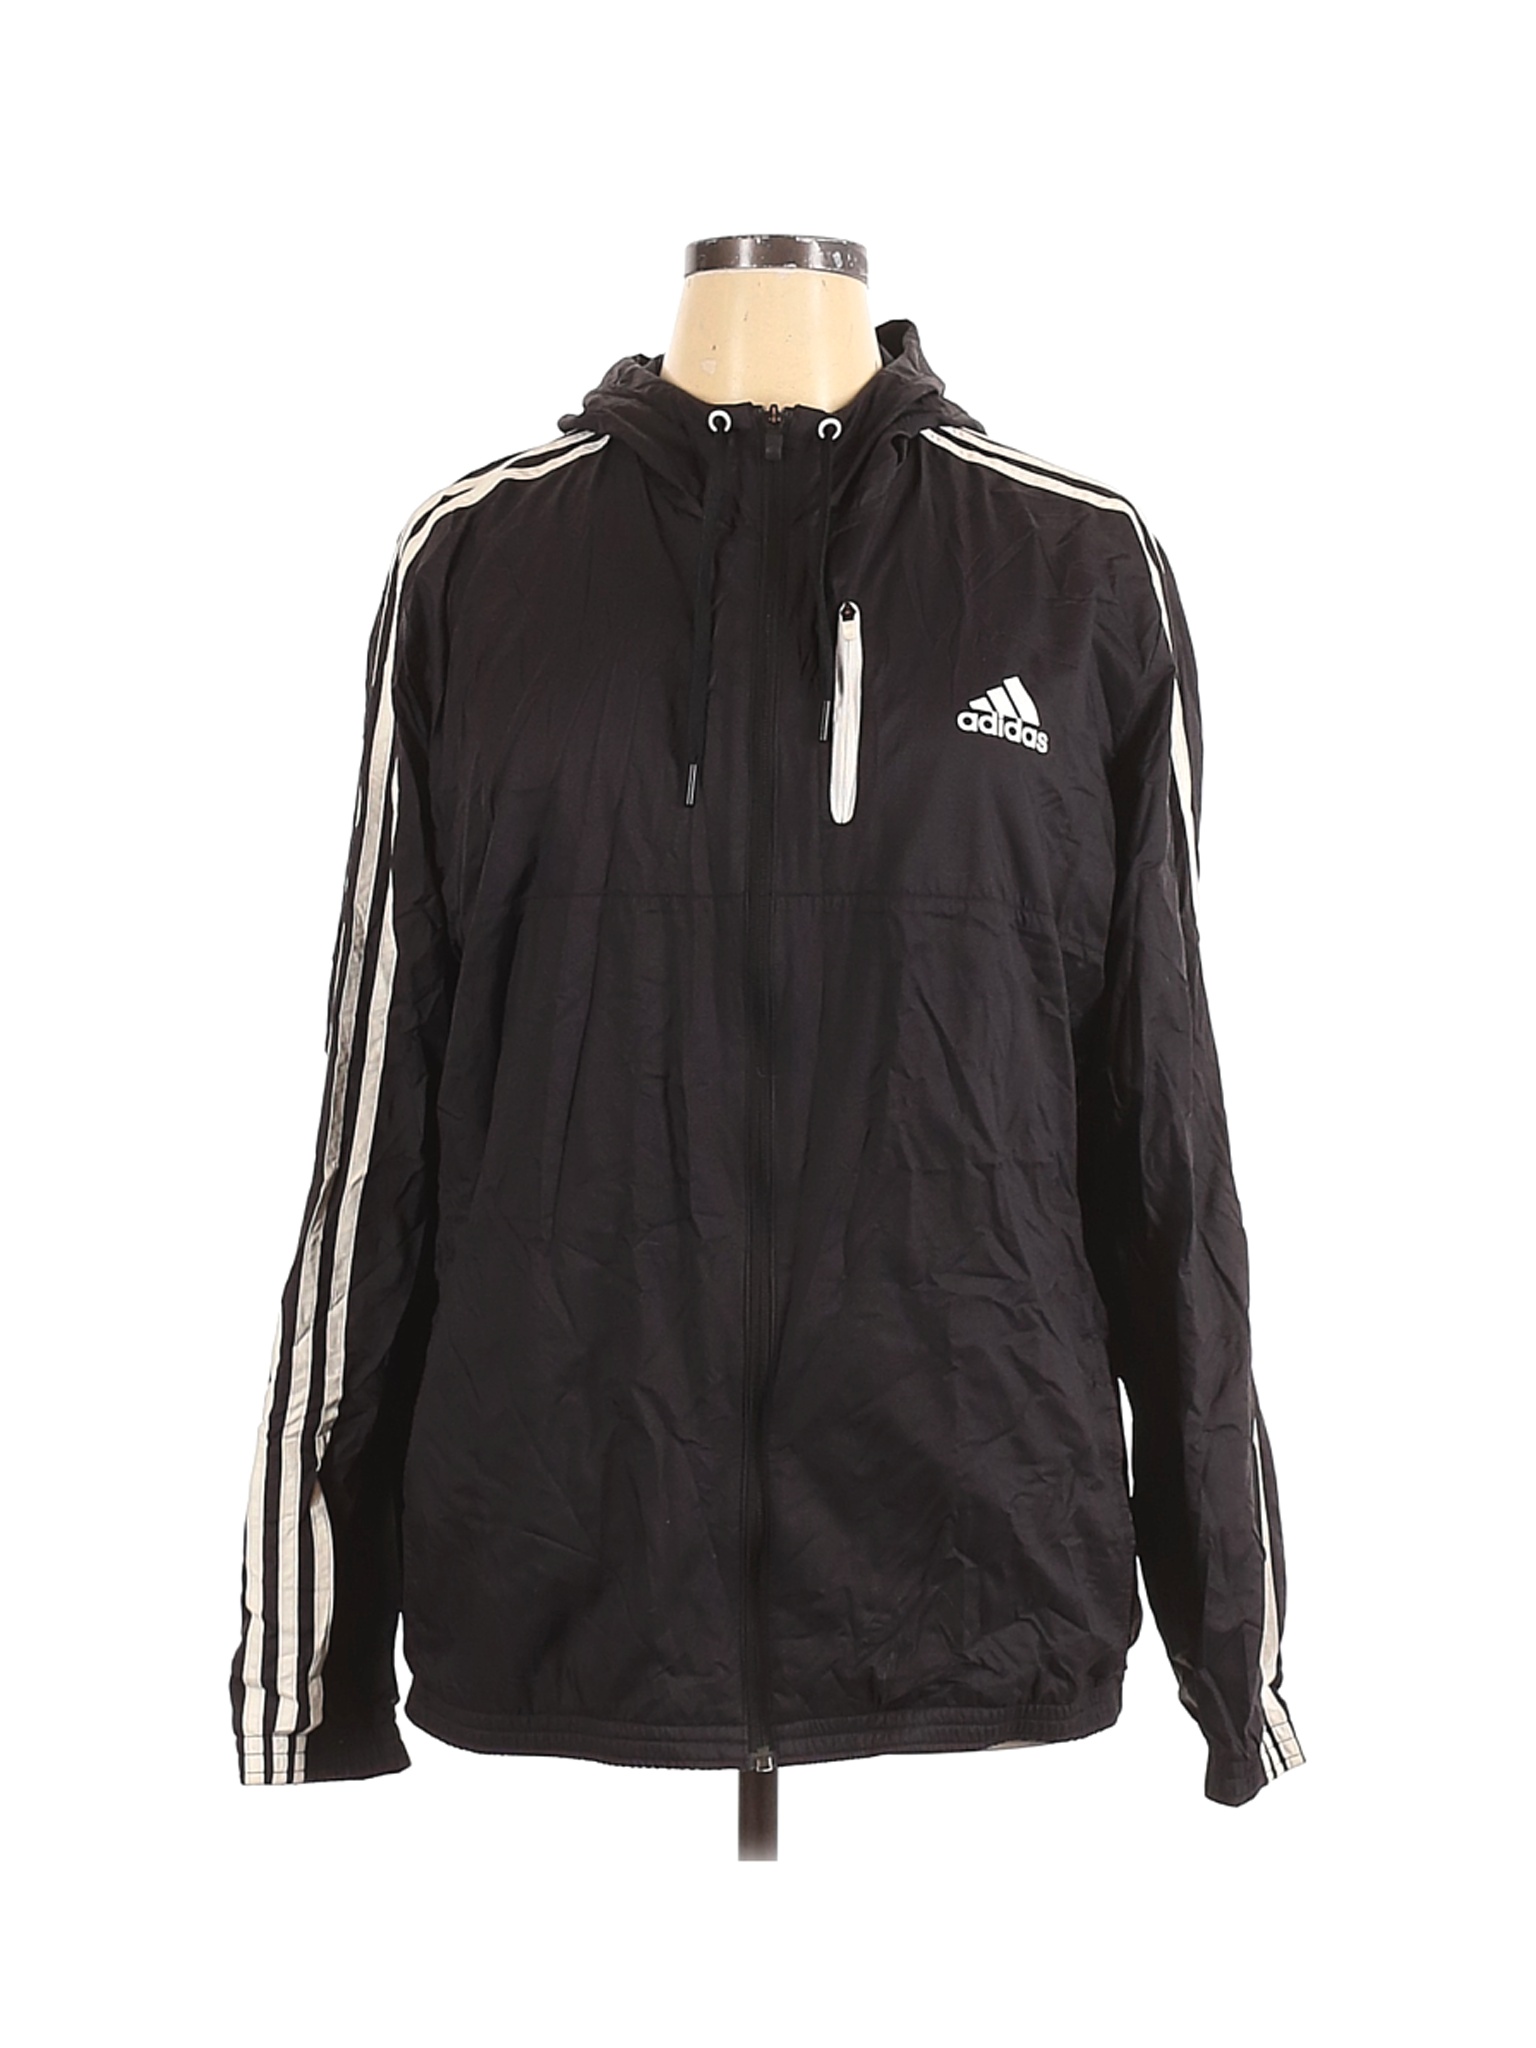 Adidas Women Black Jacket XL | eBay